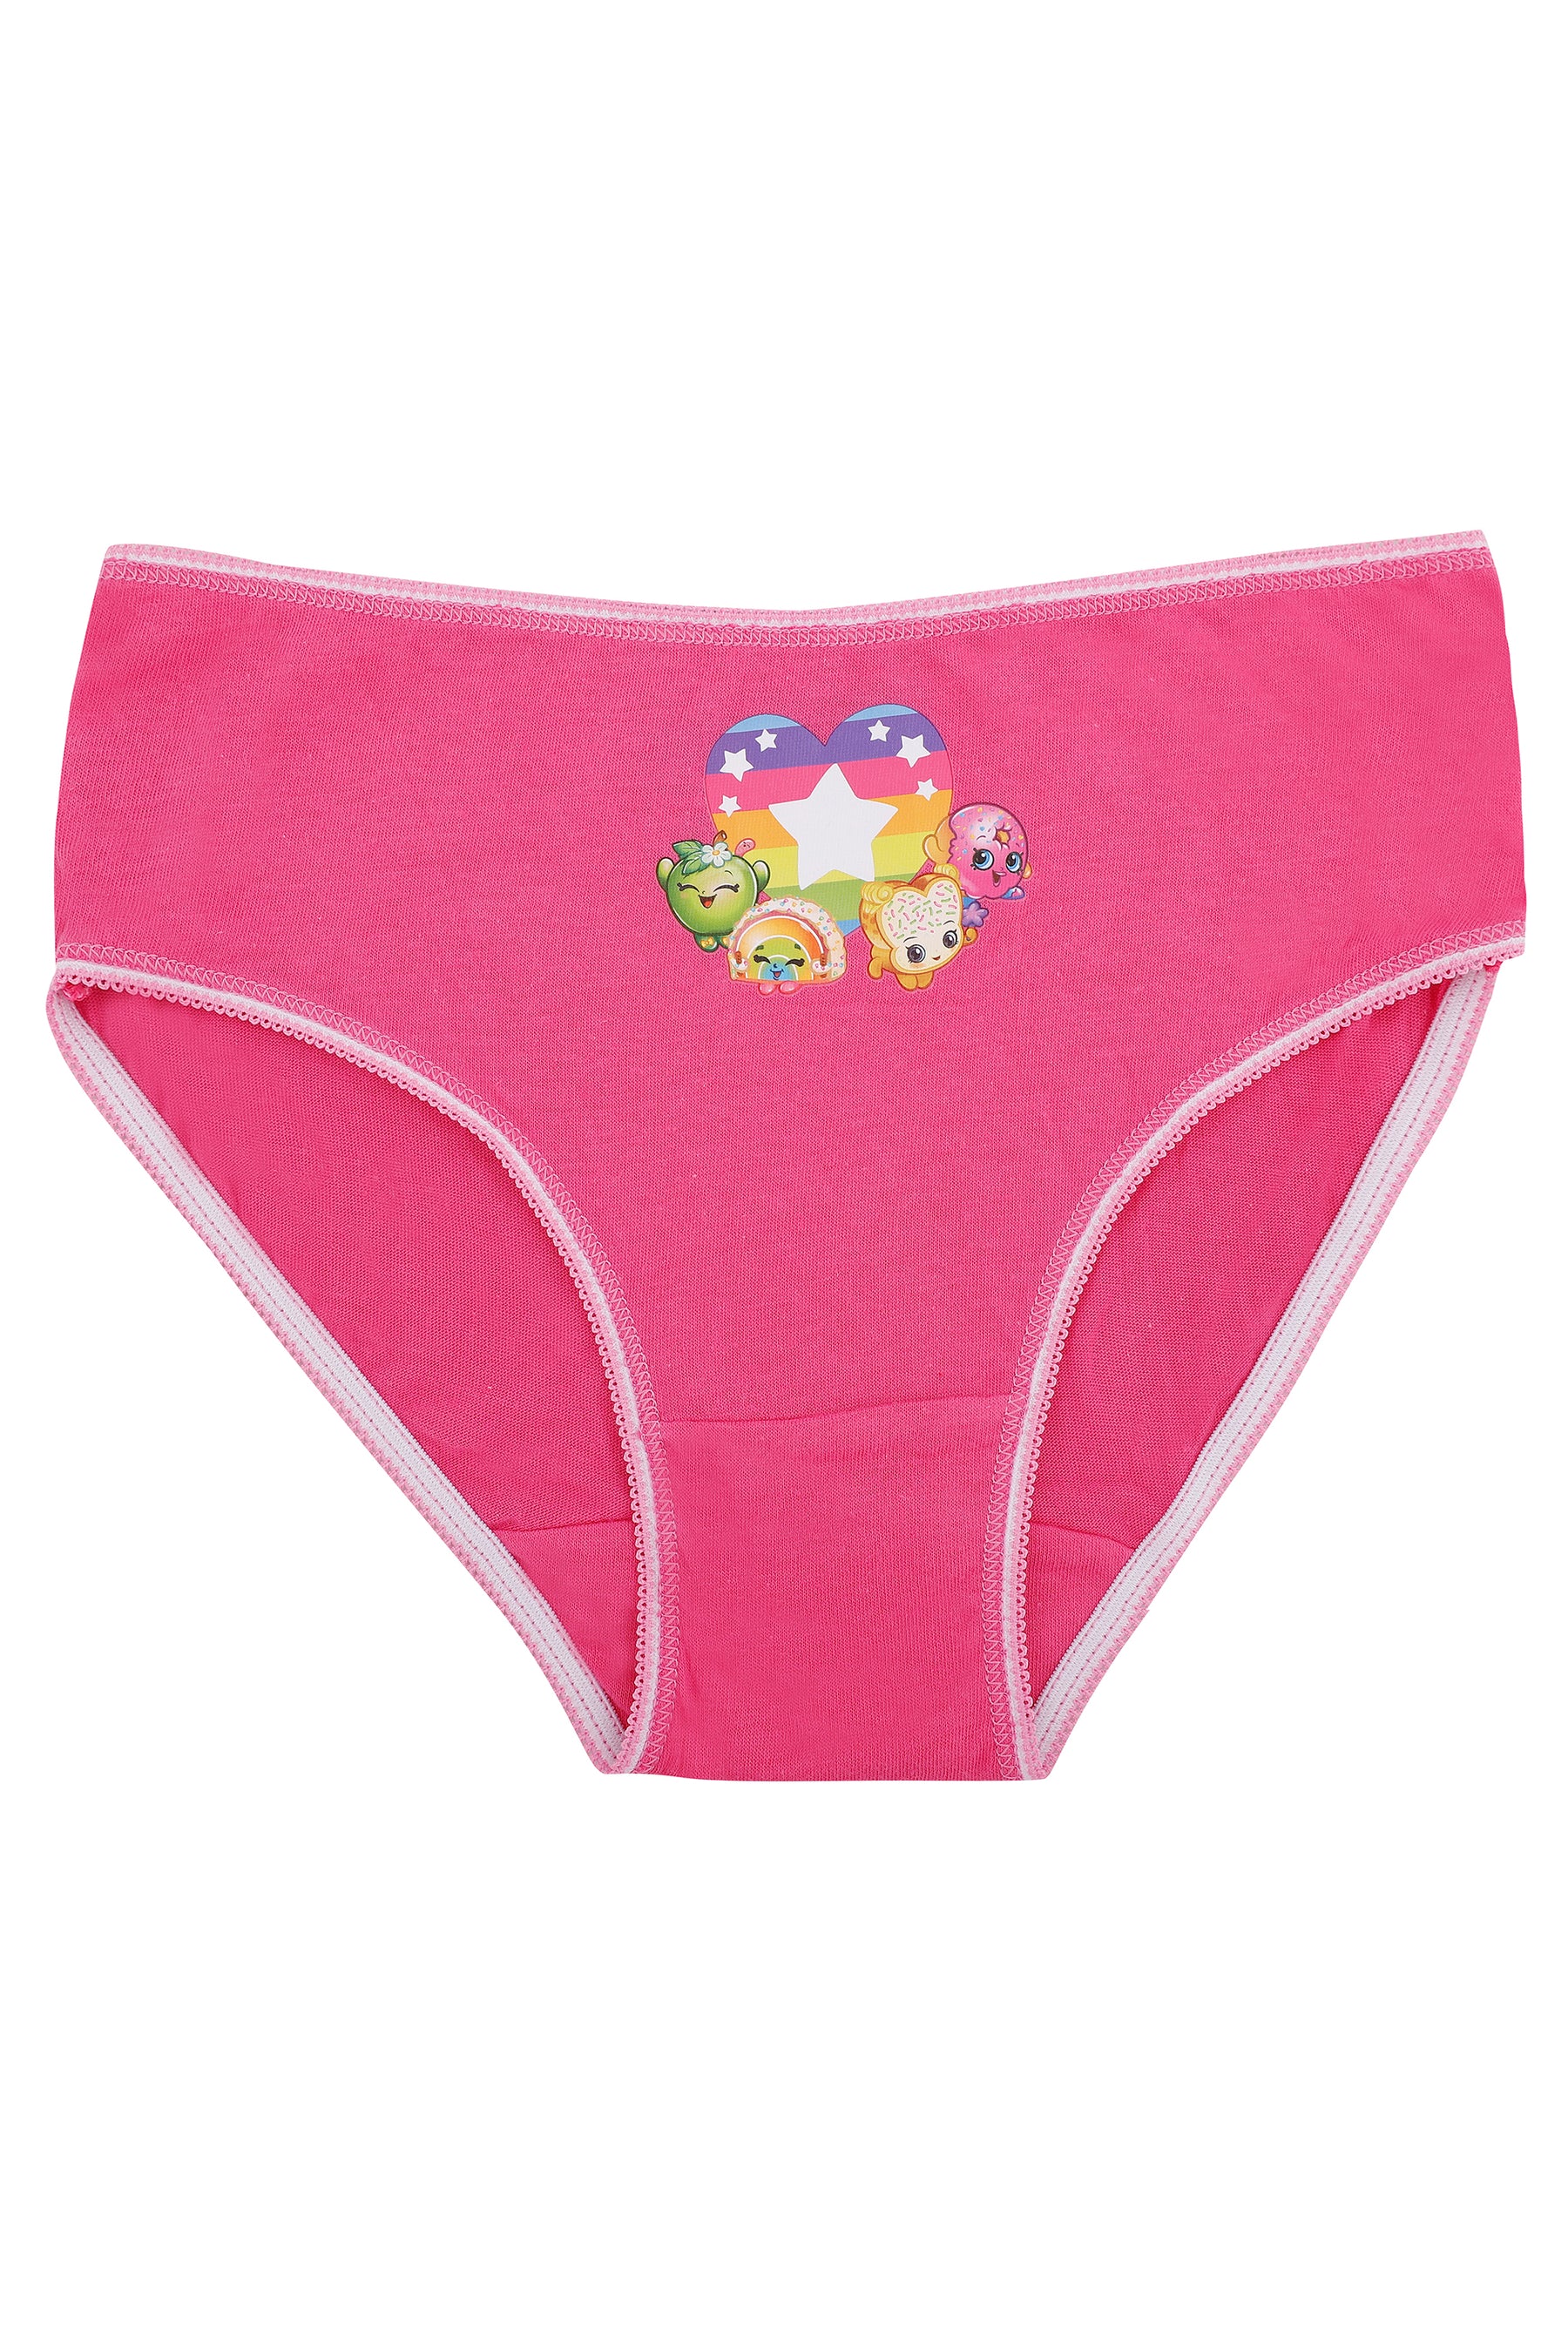 Girls SHOPKINS Panties / Underwear - Size 6 - NEW NWT - THREE PAIRS - CUTE!